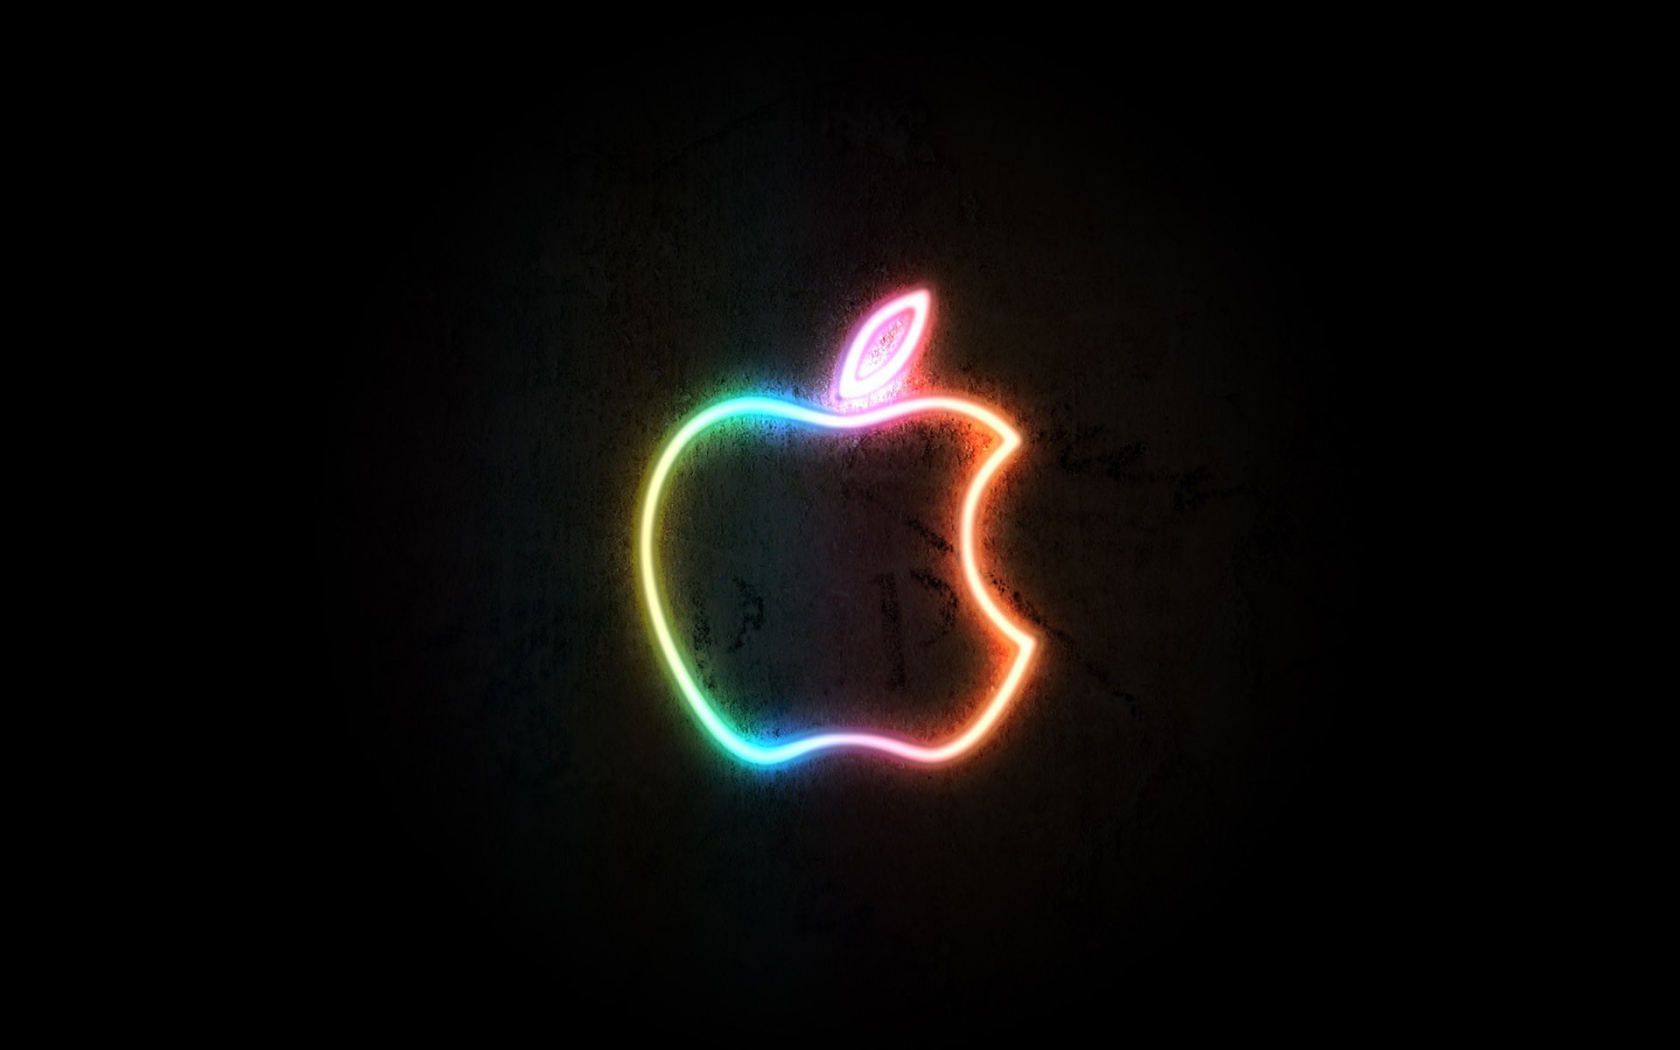 The Neon apple